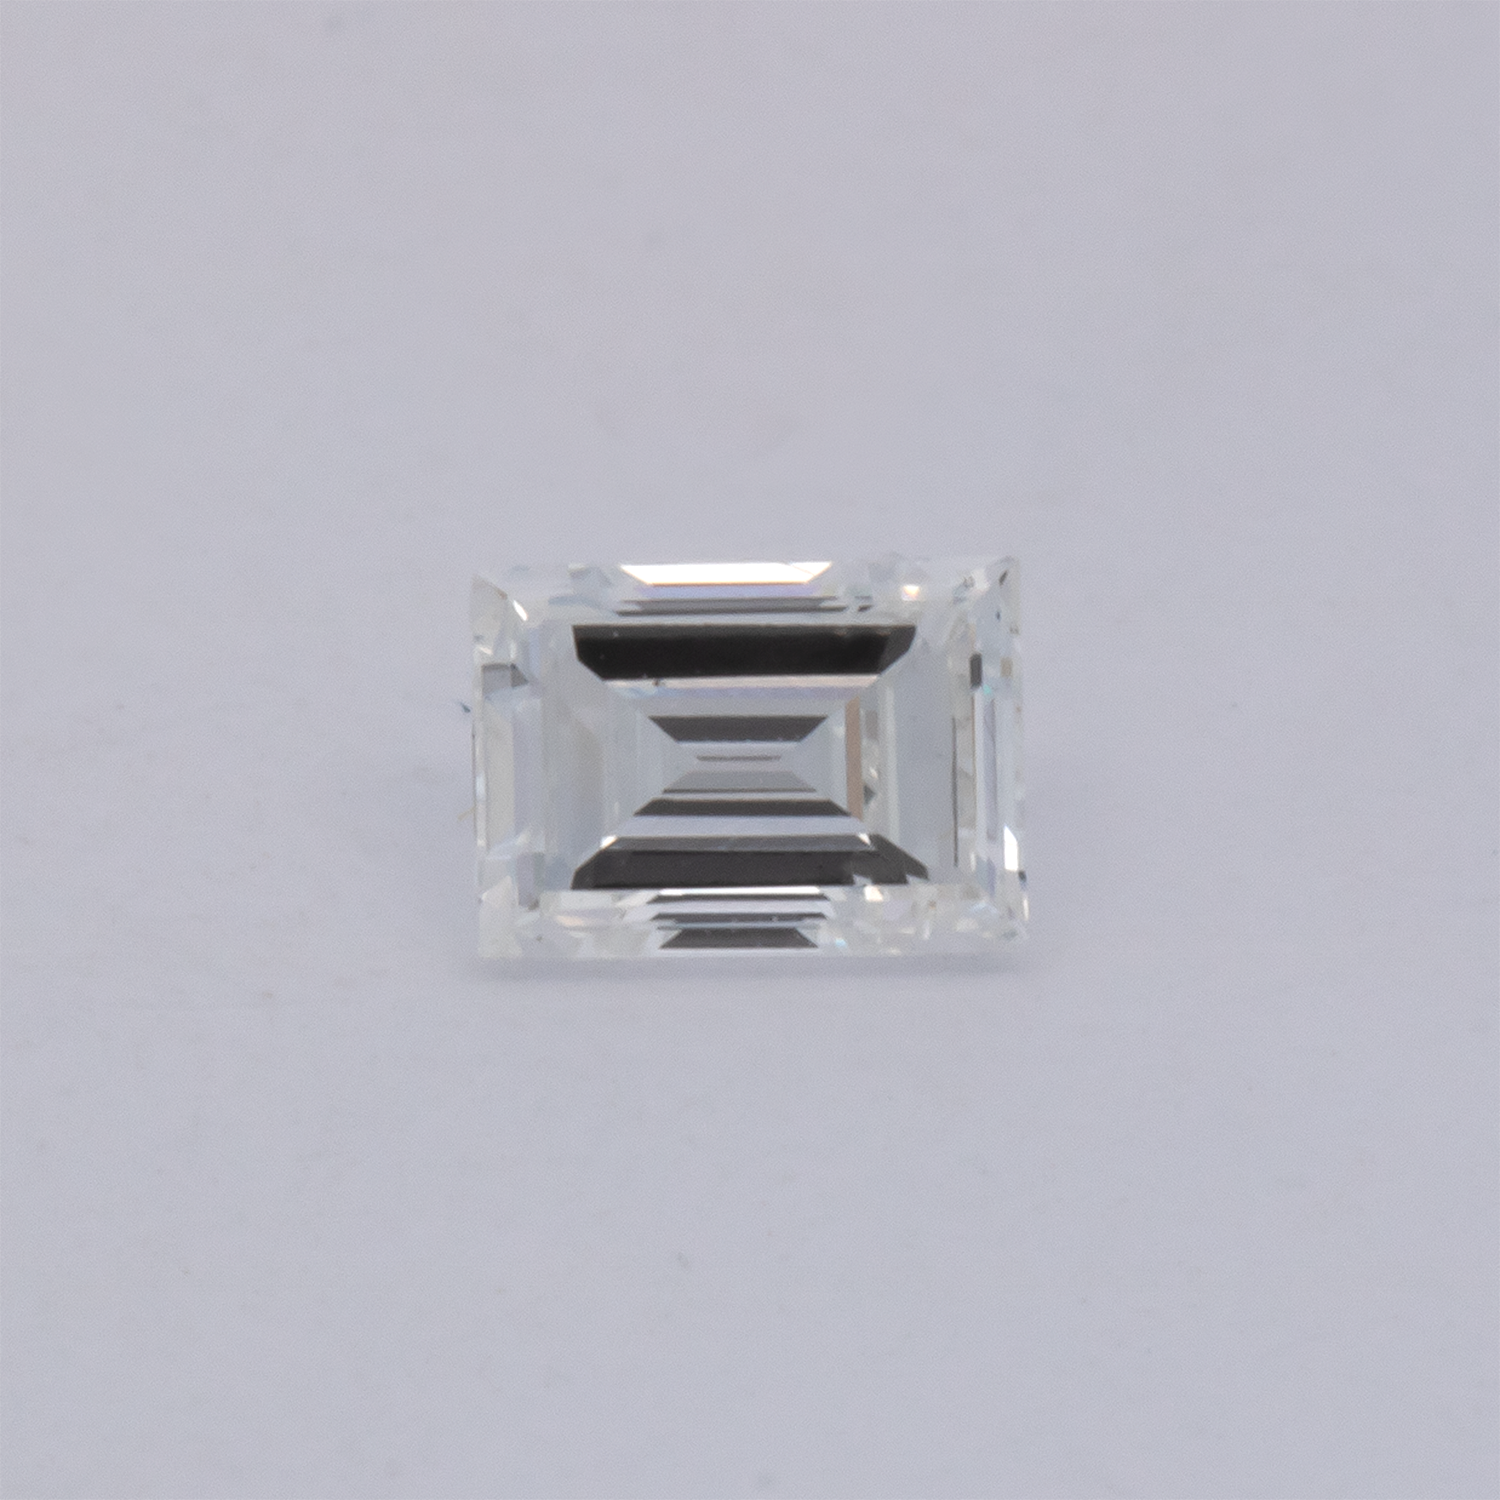 Diamant - fein weiß, baguette, 4x2.9 mm, 0.23 cts, Nr. DT1019